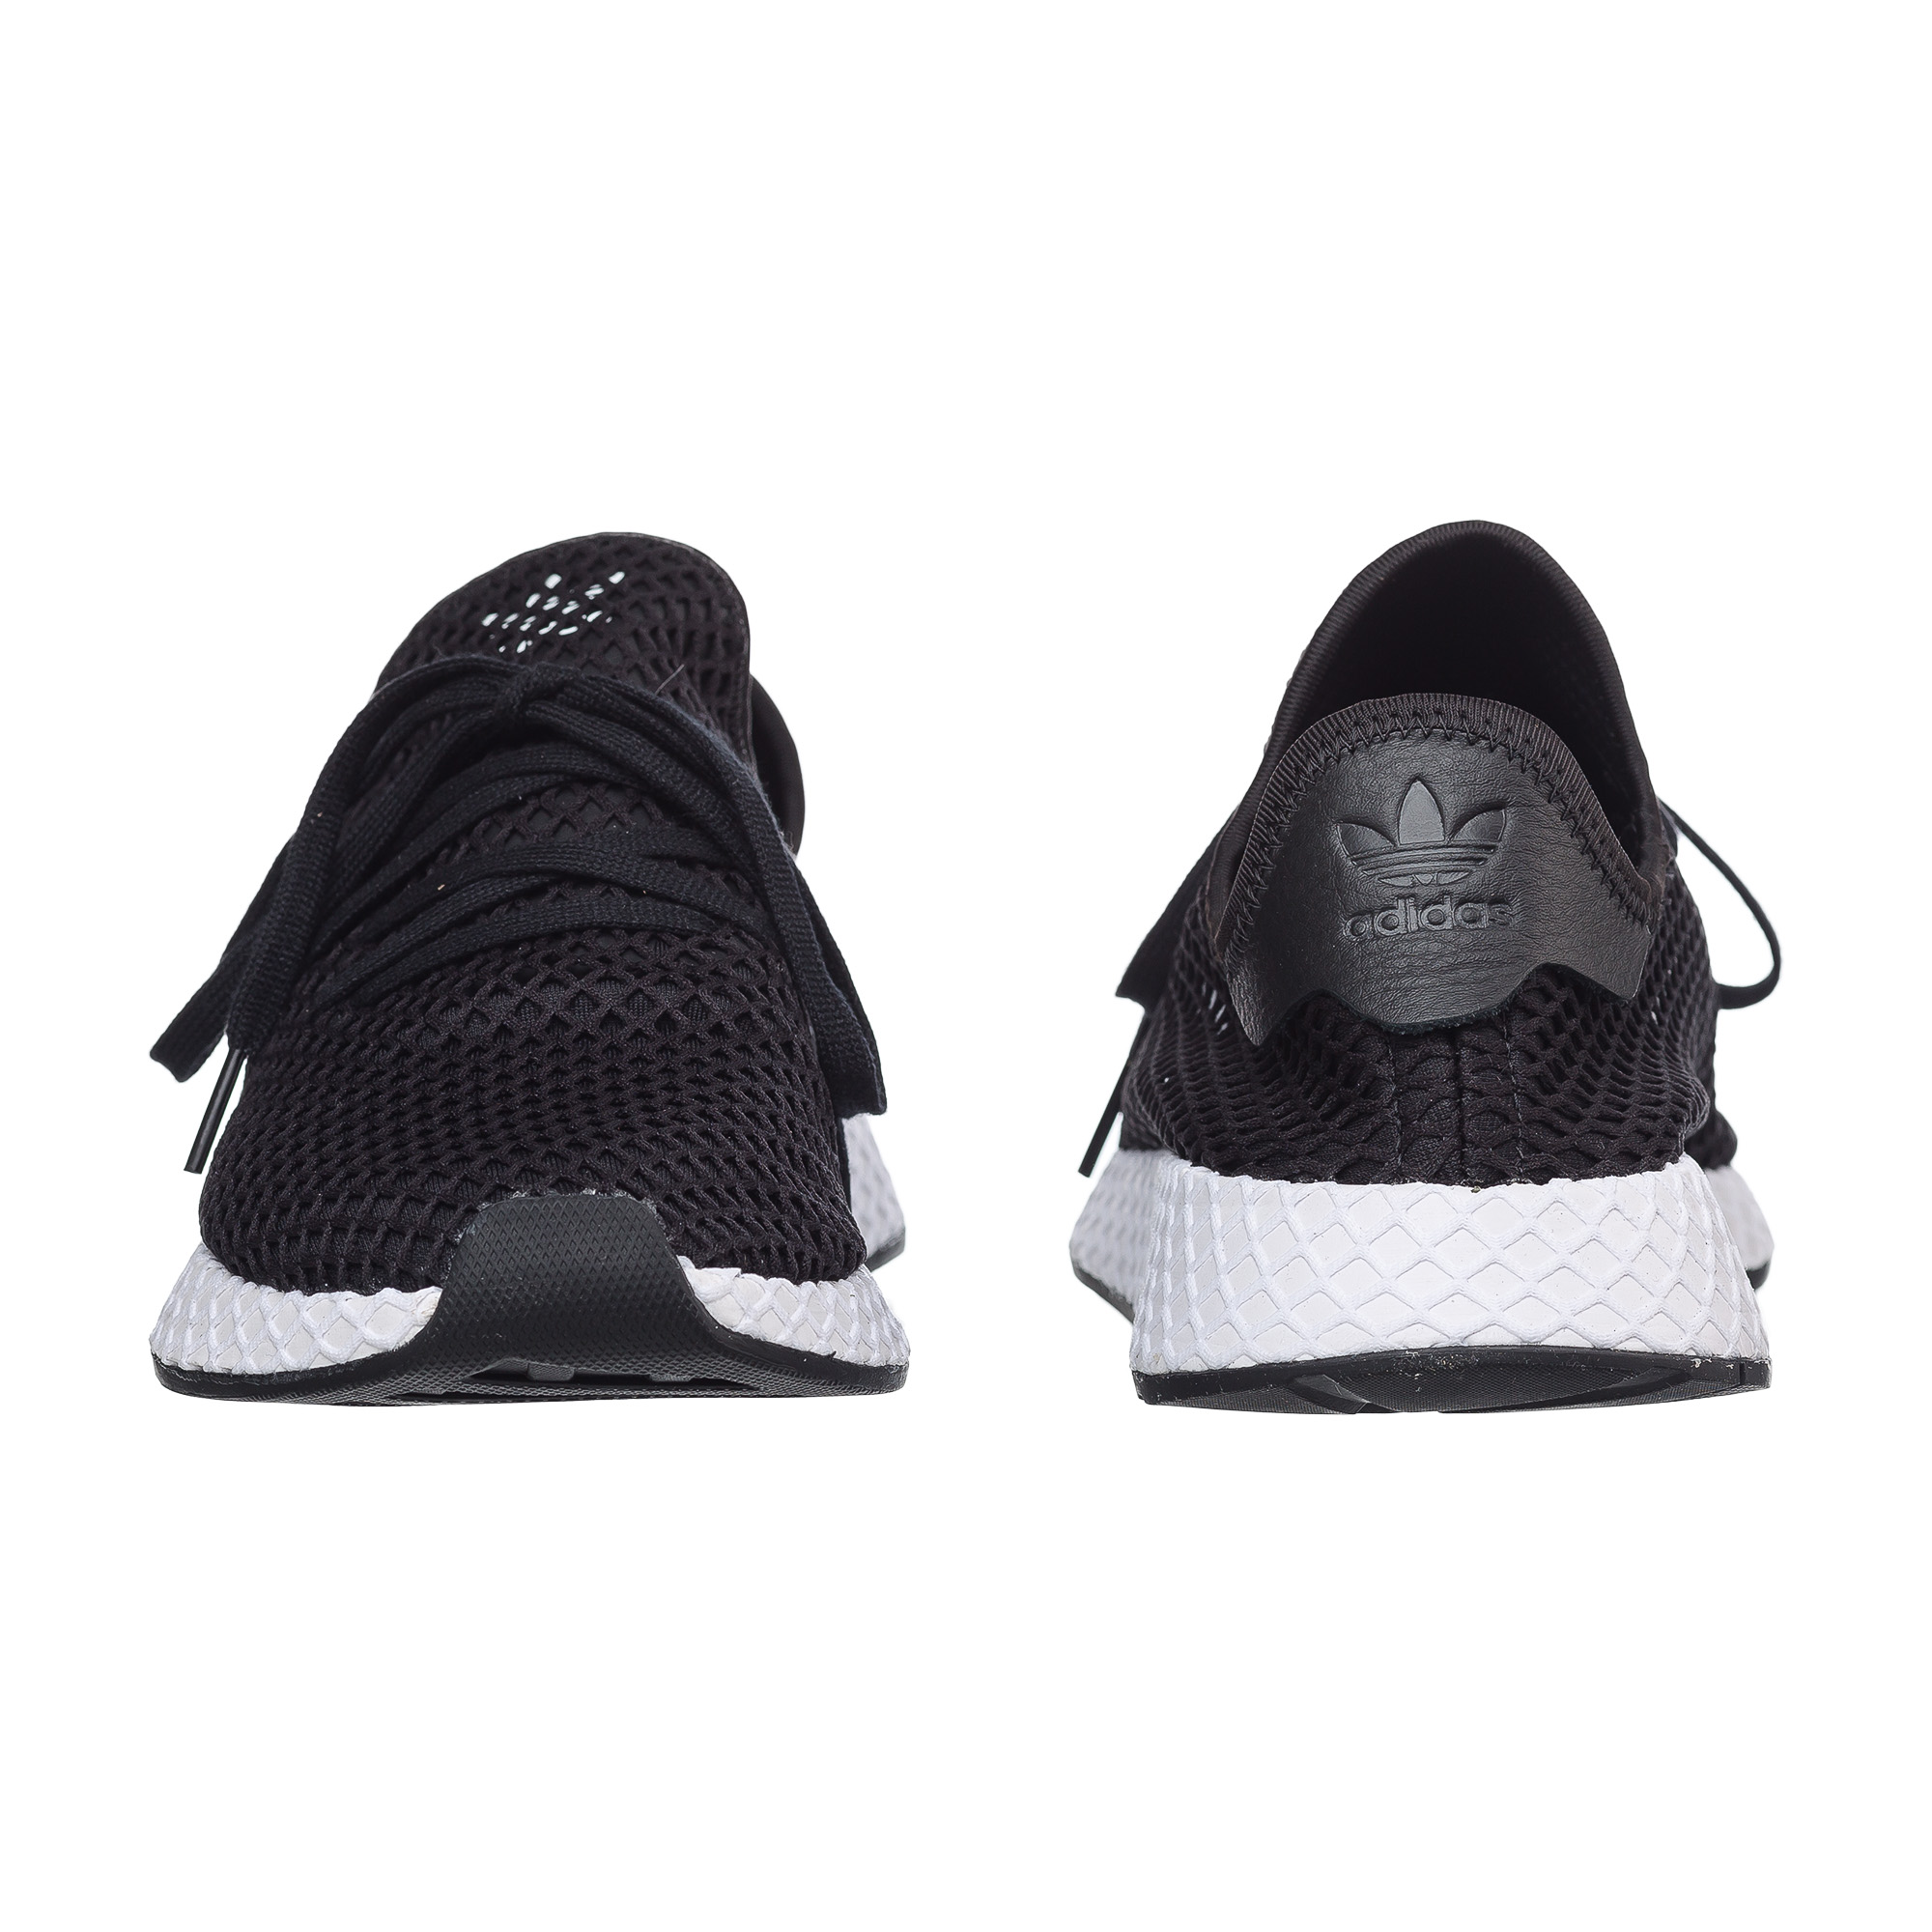 DEERUPT RUNNER Adidas, размер 42.5, цвет черный ADBD7890 - фото 5